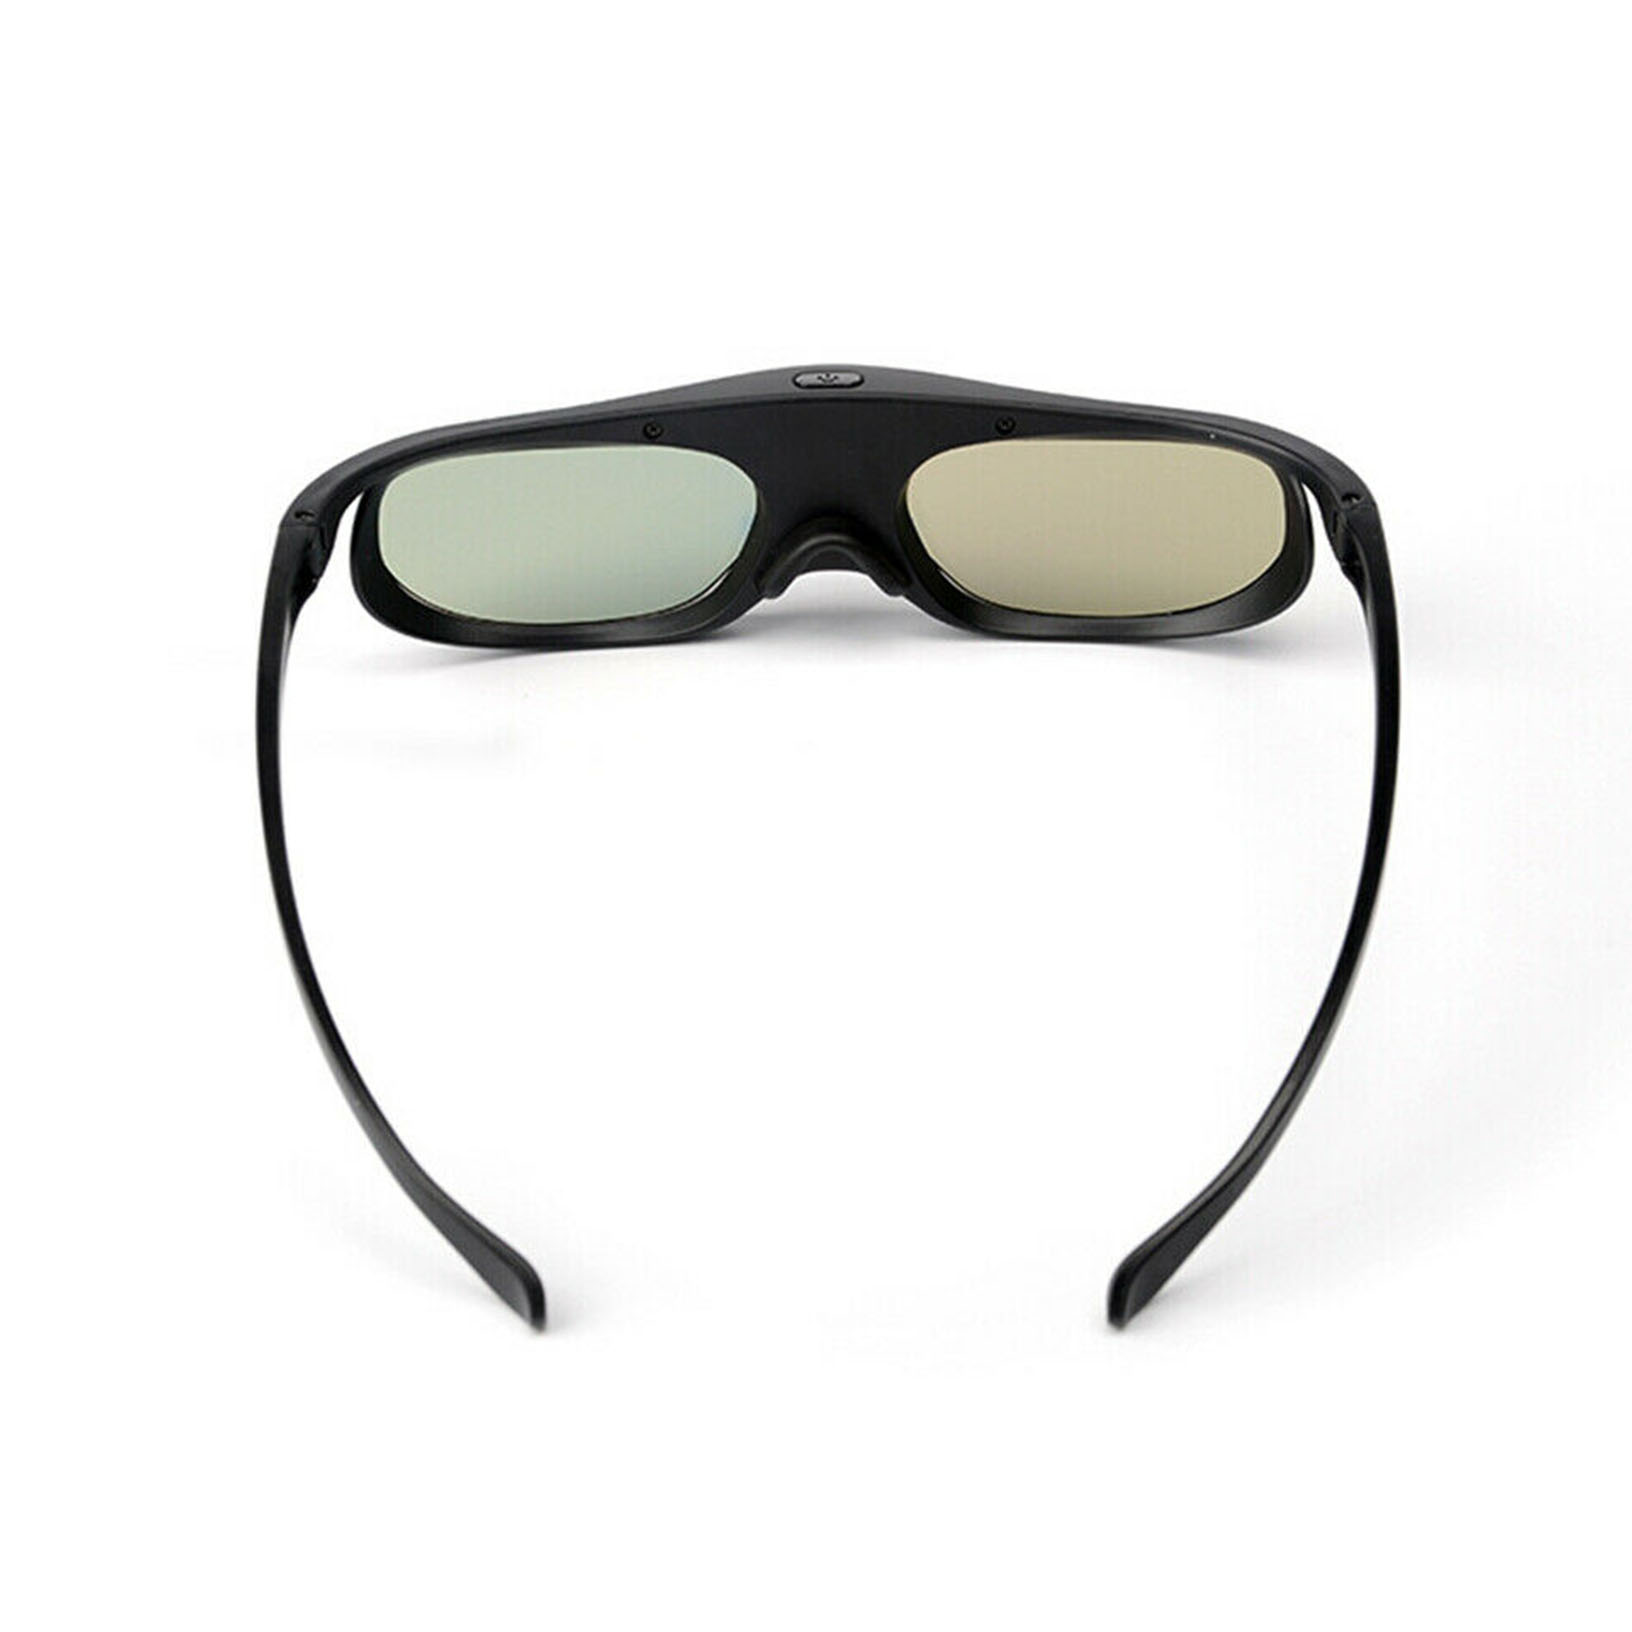 Active Shutter 3d Glasses Eyewear For Dlp Link Projector Ebay